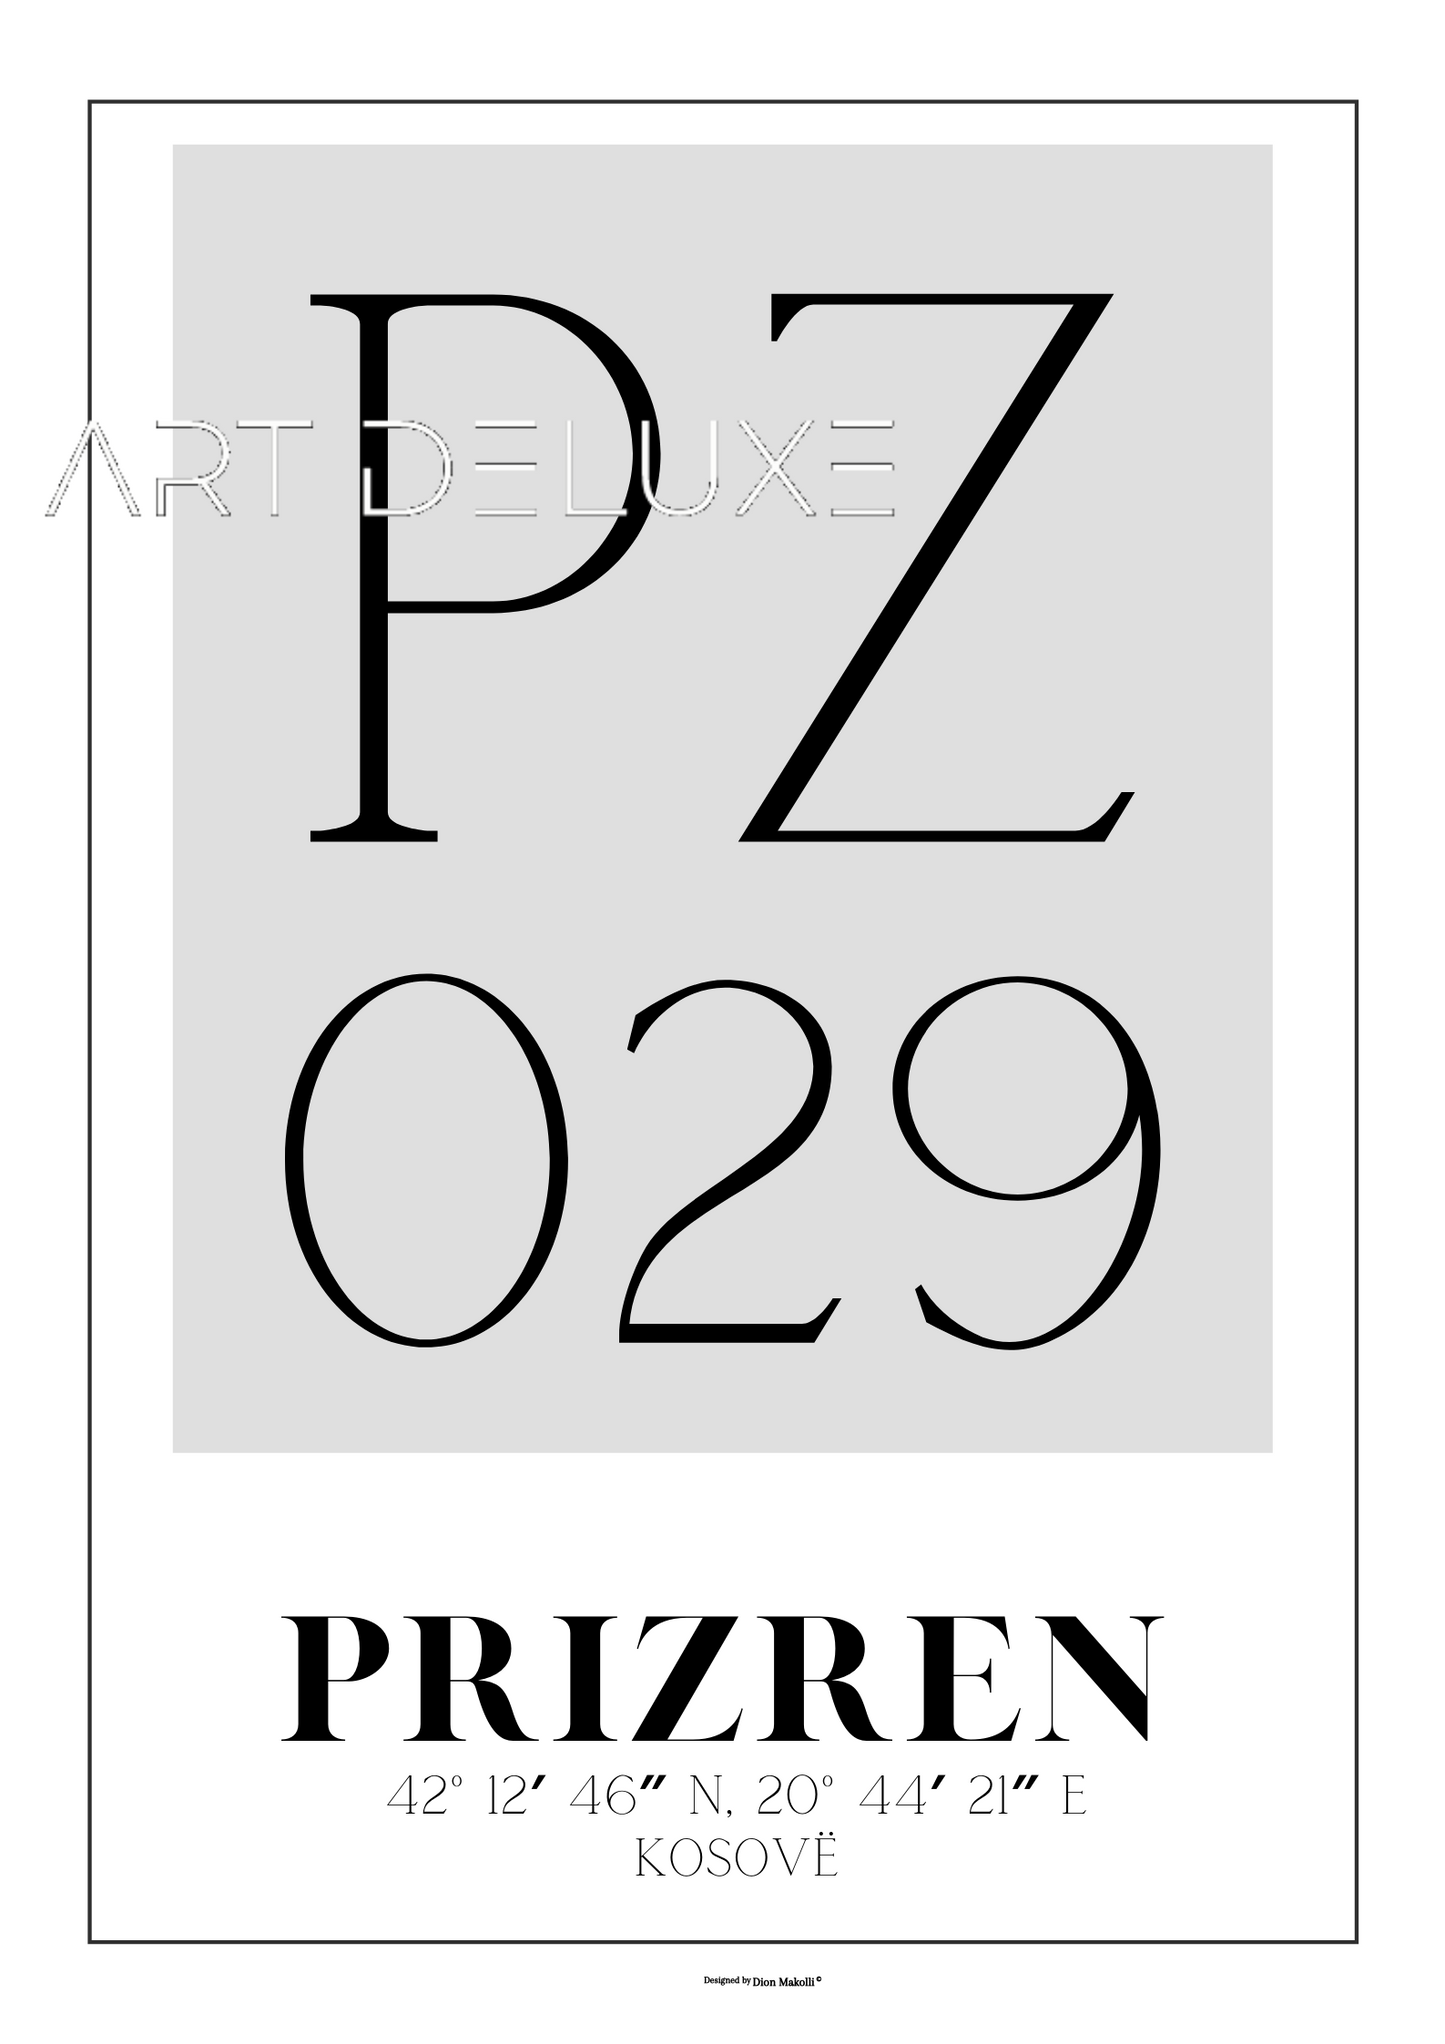 Prizren - Poster